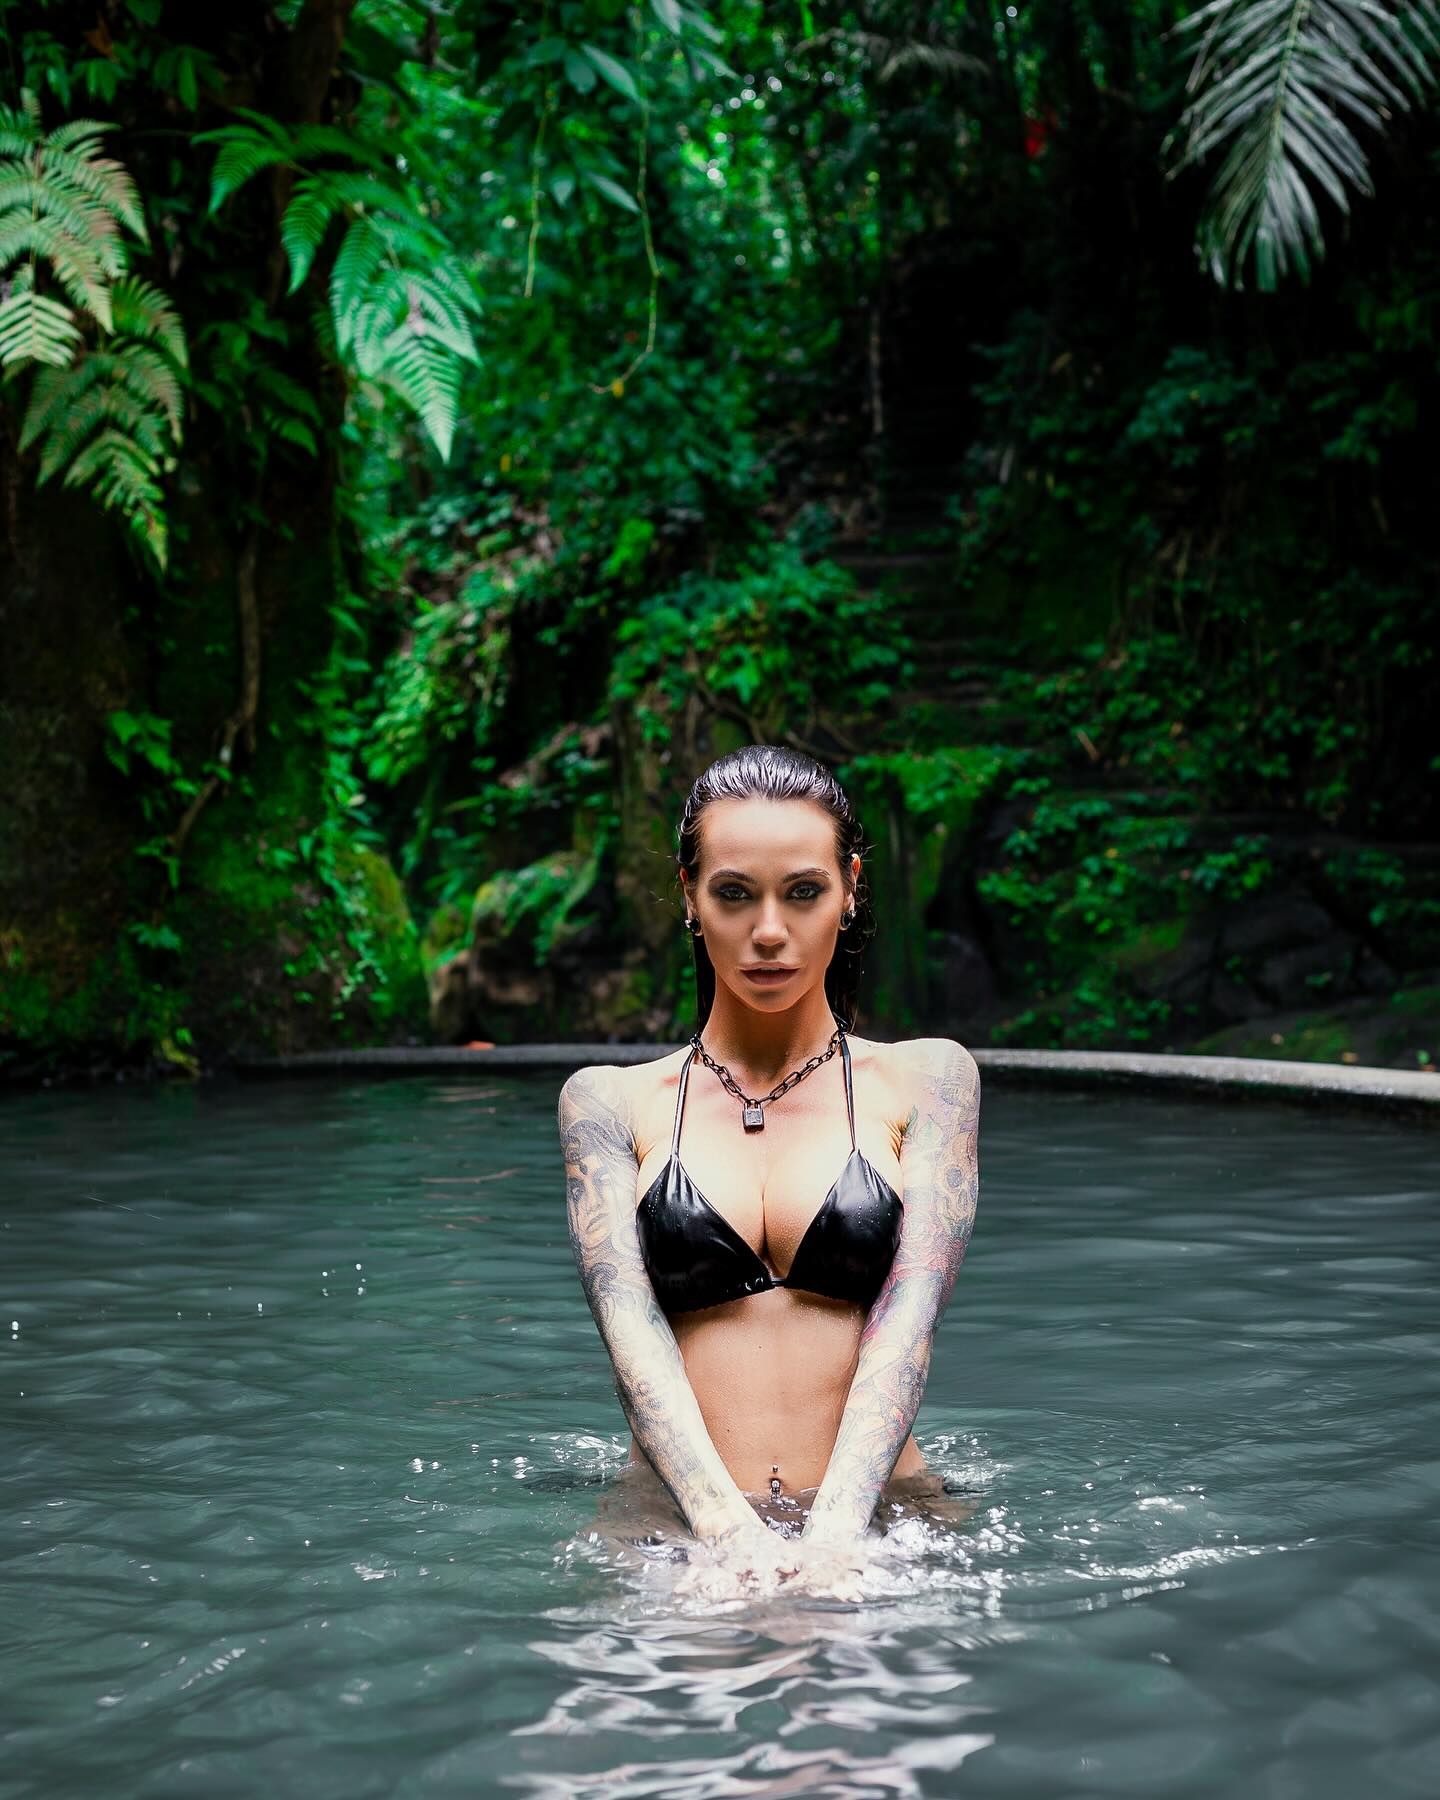 Pretty sure I was a siren in my past life 🧜‍♀️

📍 Kanto Lampo Waterfall, Ubud, Bali, Indonesia 

📸 @kylehulett 
Editing skills @miller.spec.media2